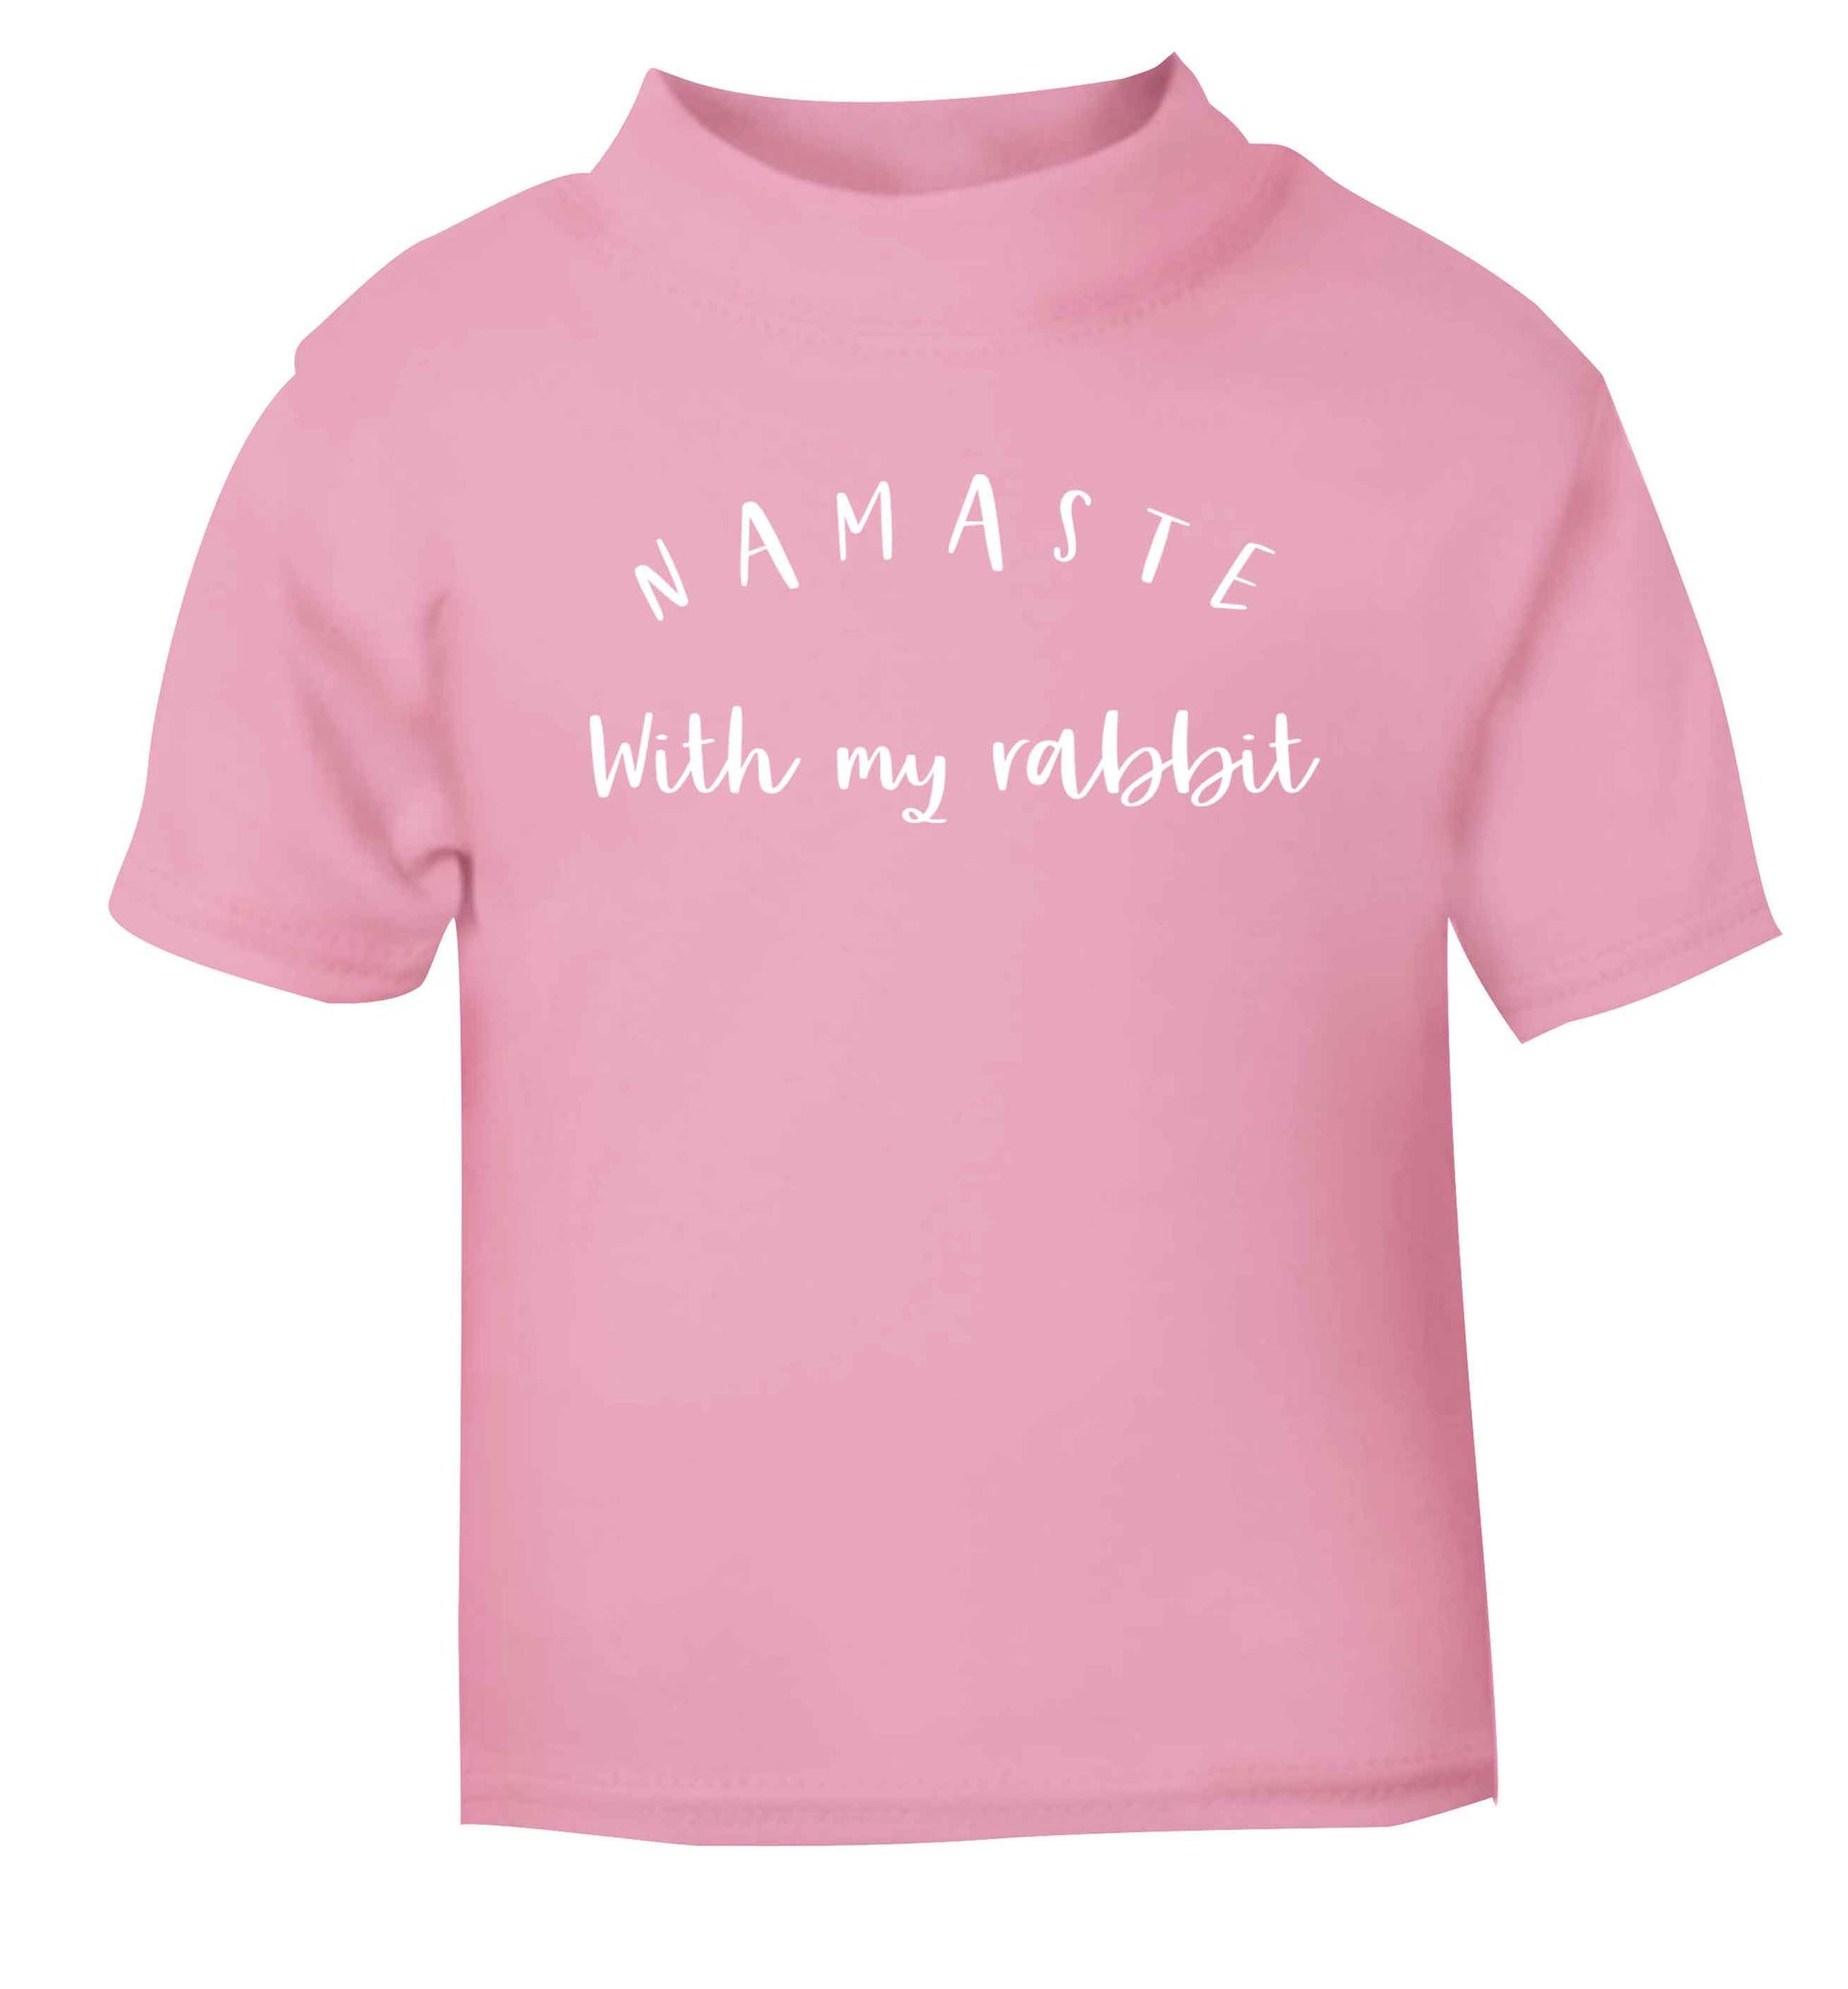 Namaste with my rabbit light pink Baby Toddler Tshirt 2 Years